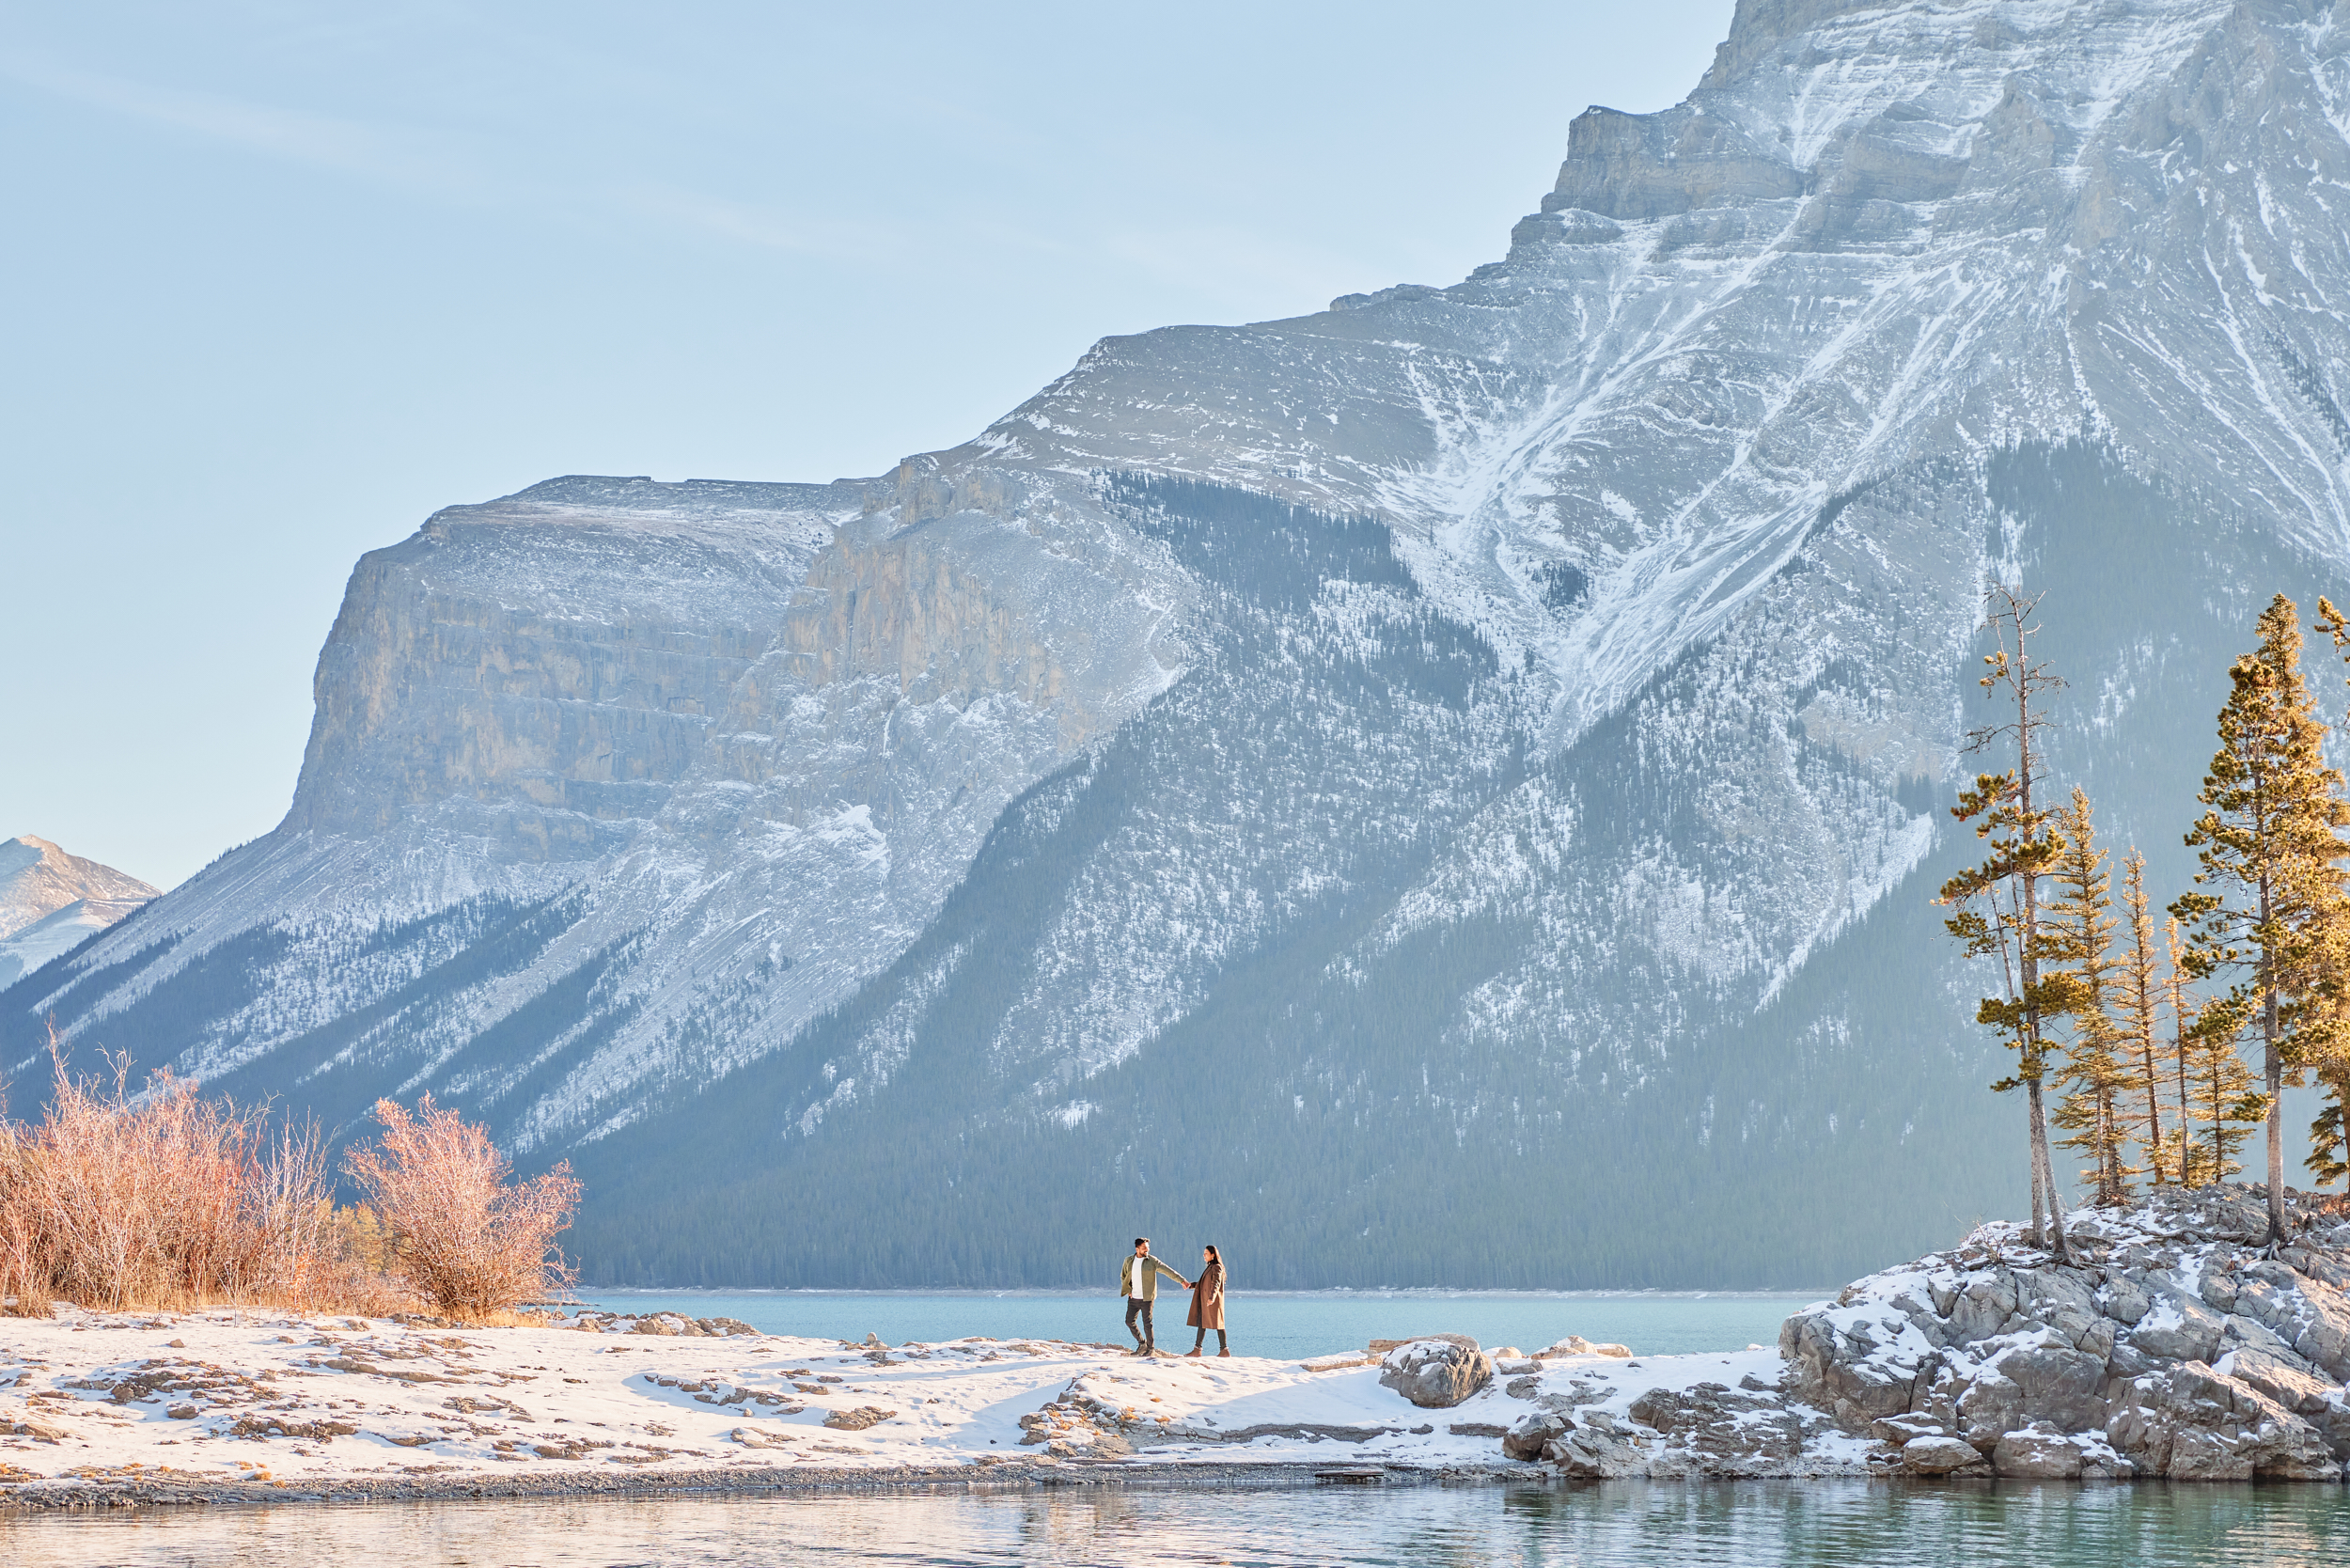 Banff Proposal Photography